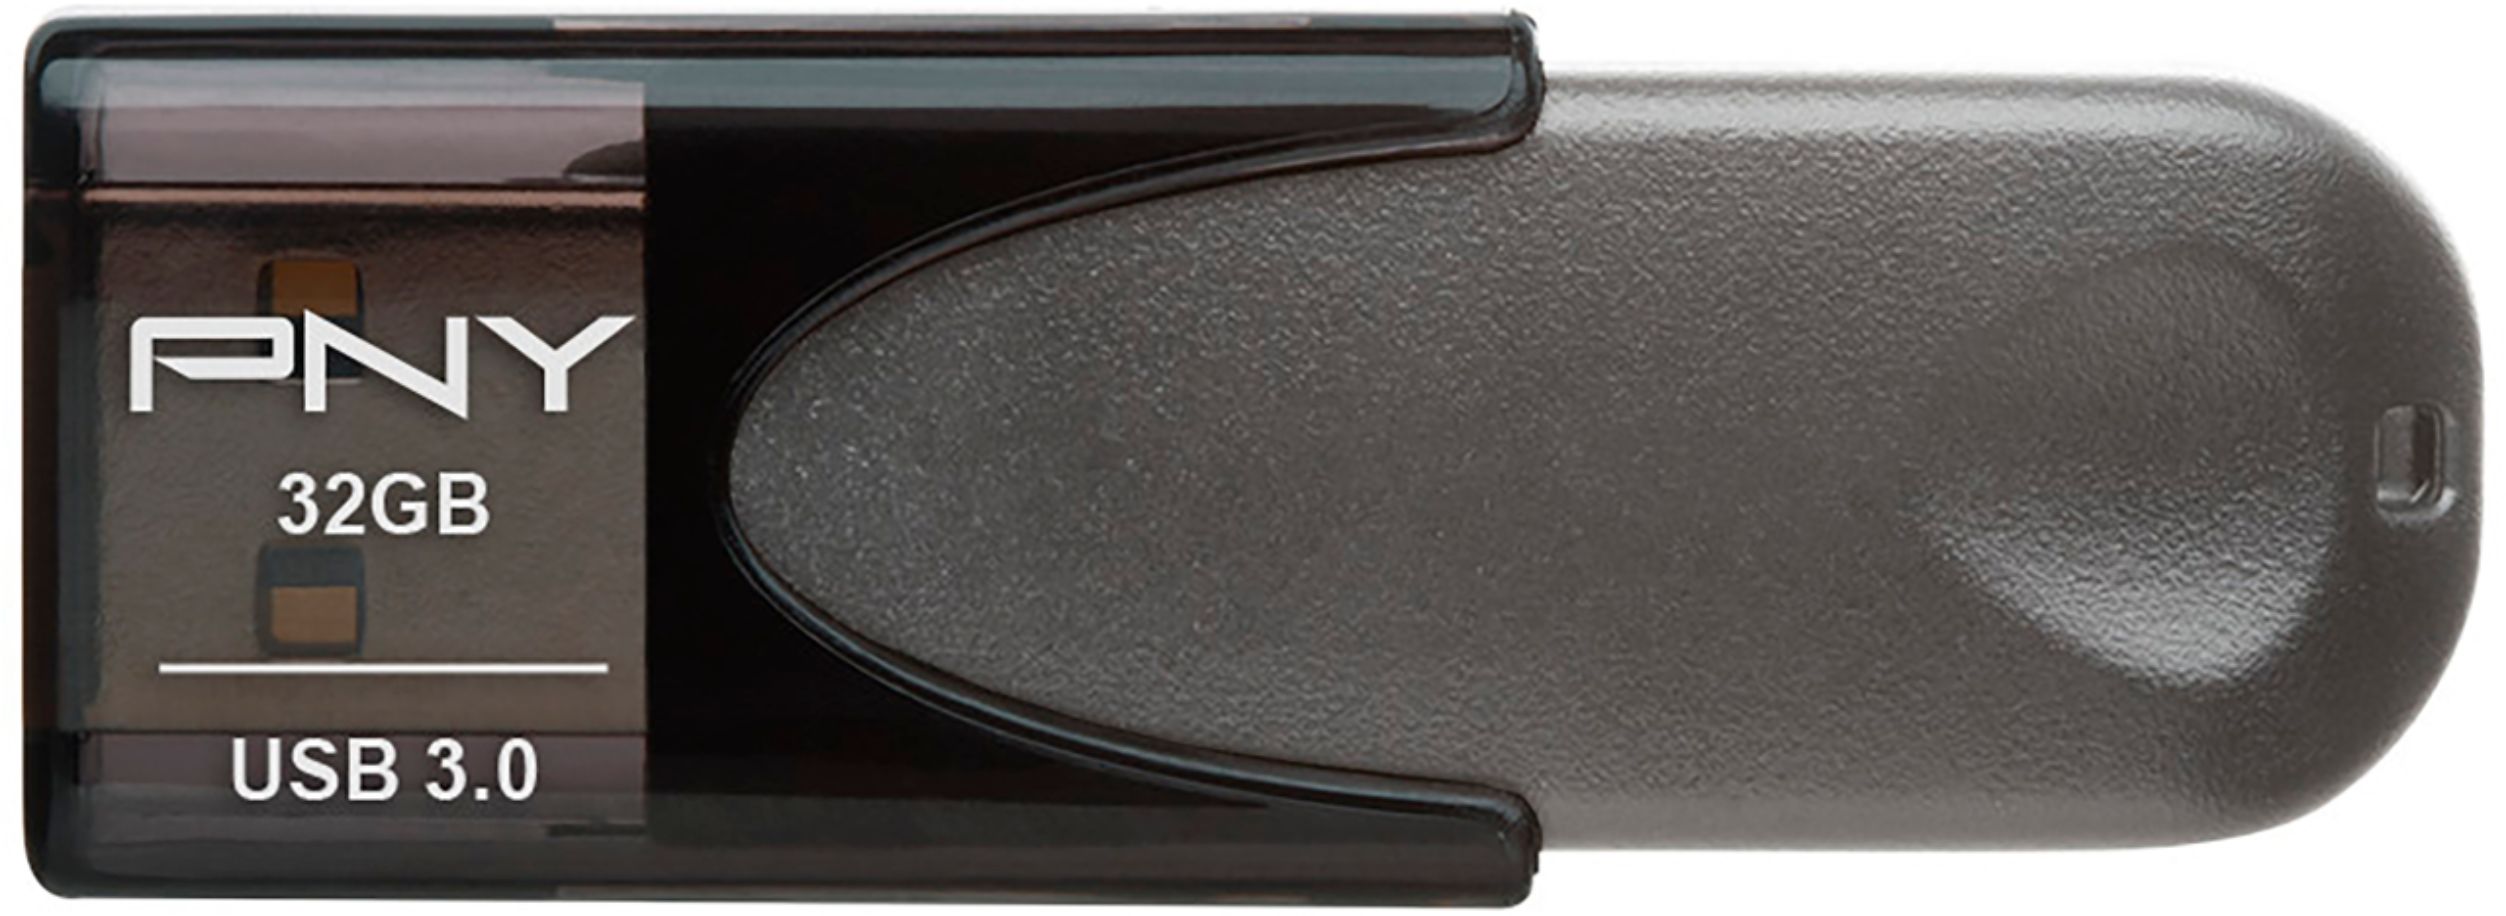 PNY - Elite Turbo Attache 4 32GB USB 3.0 Type A Flash Drive - Black/Gray was $12.99 now $5.99 (54.0% off)